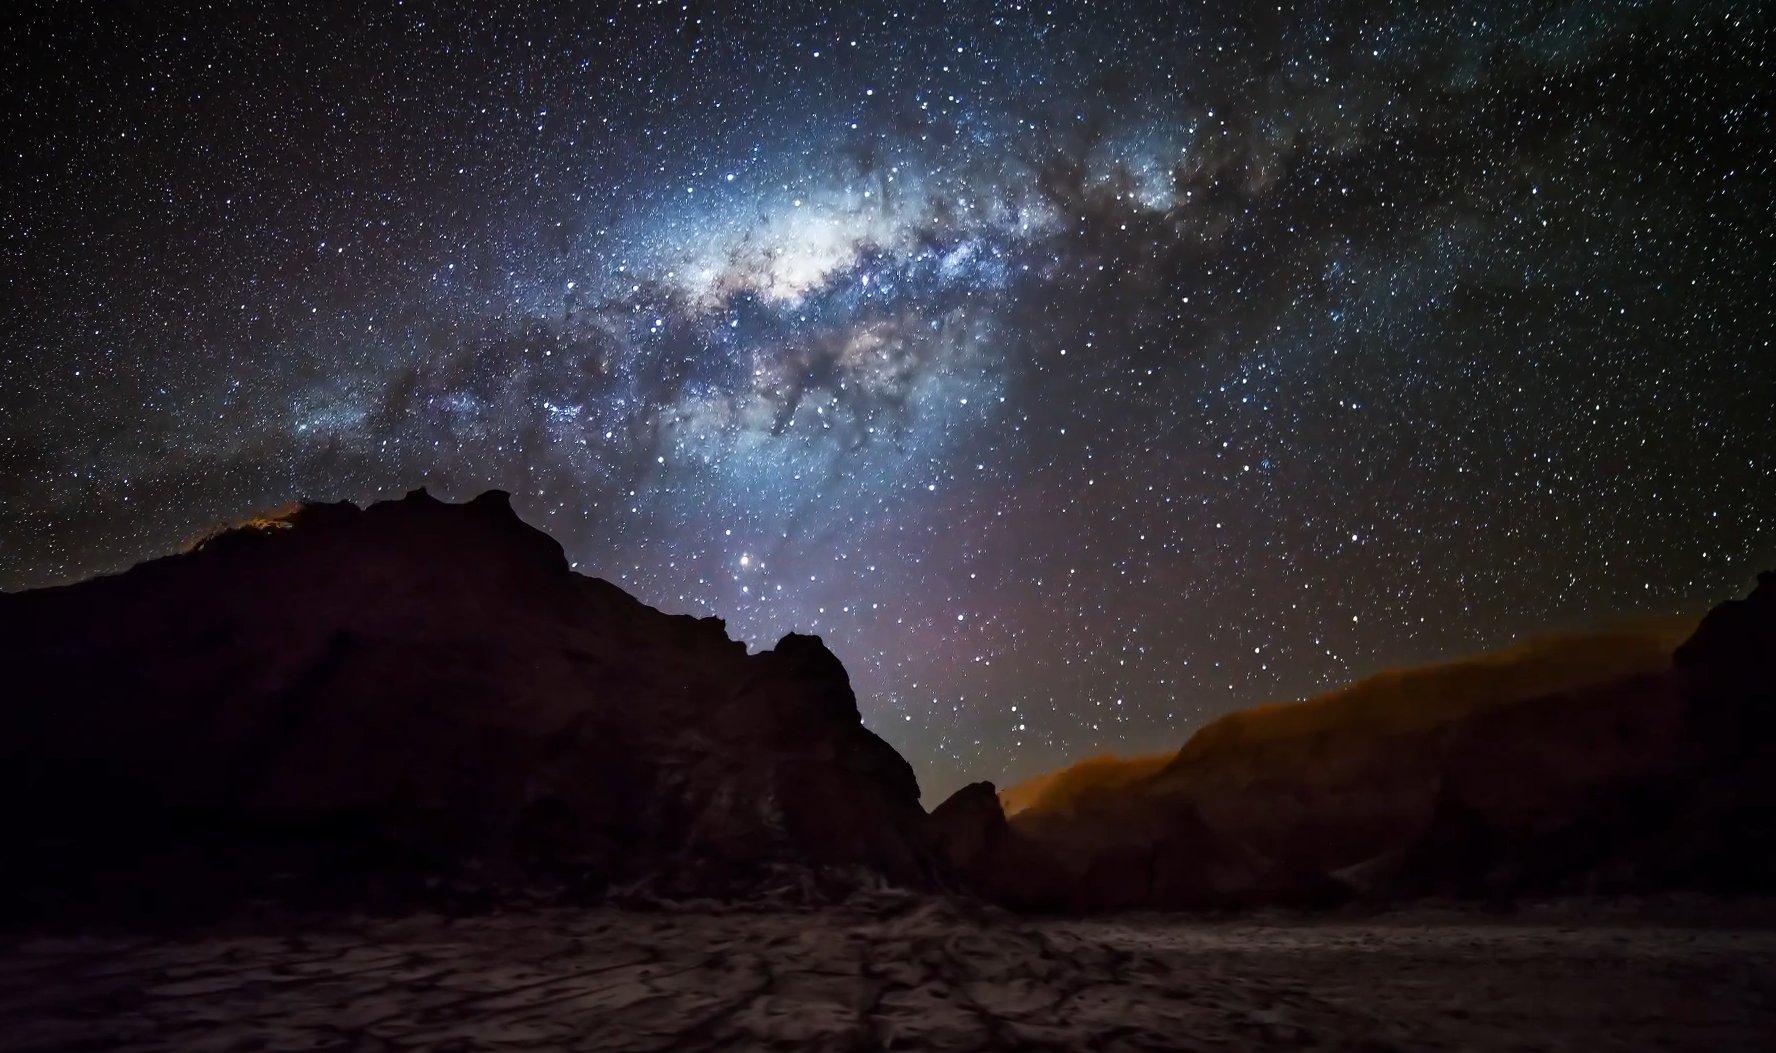 Star Studded Timelapse Video From Chile's High Desert